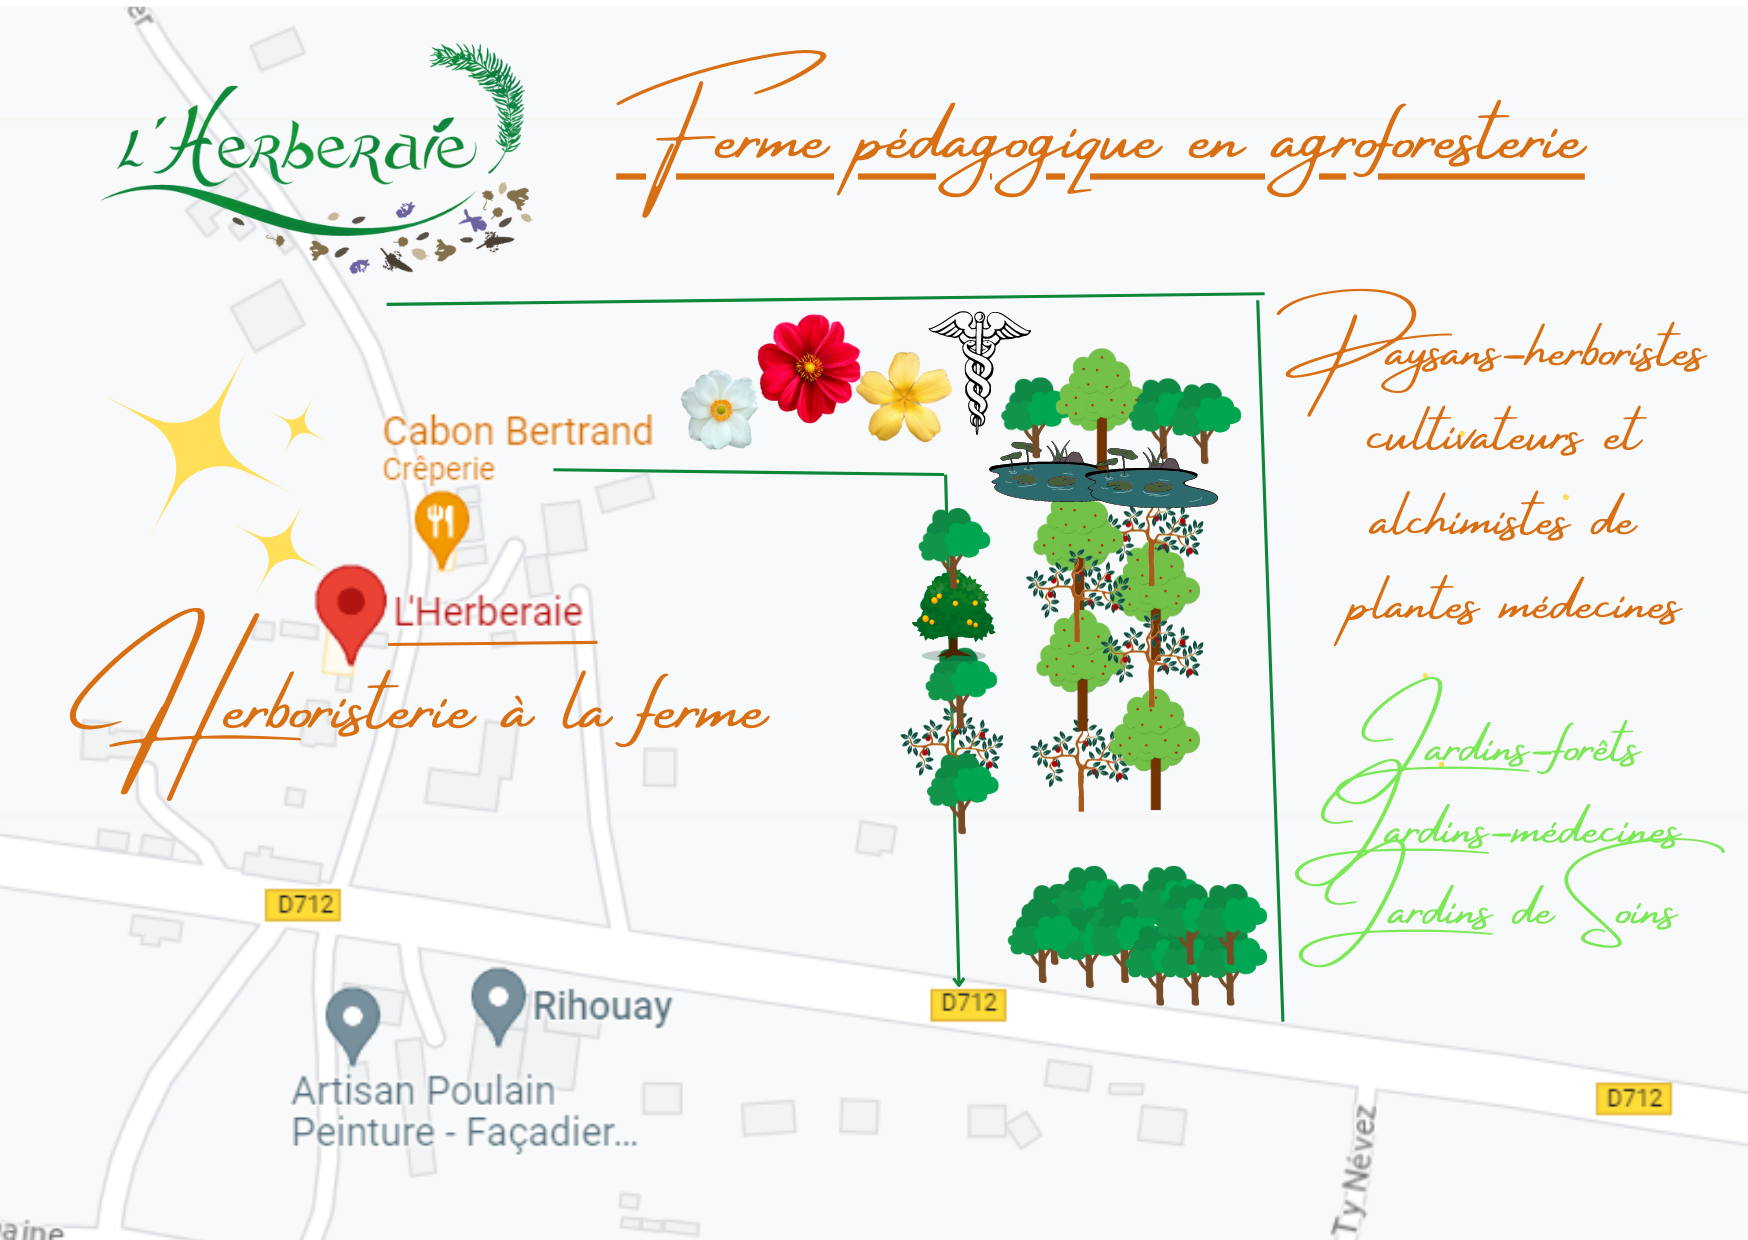 Ferme pédagogique - Agroforesterie - Herboristerie - Morlaix - Finistere - Bretagne